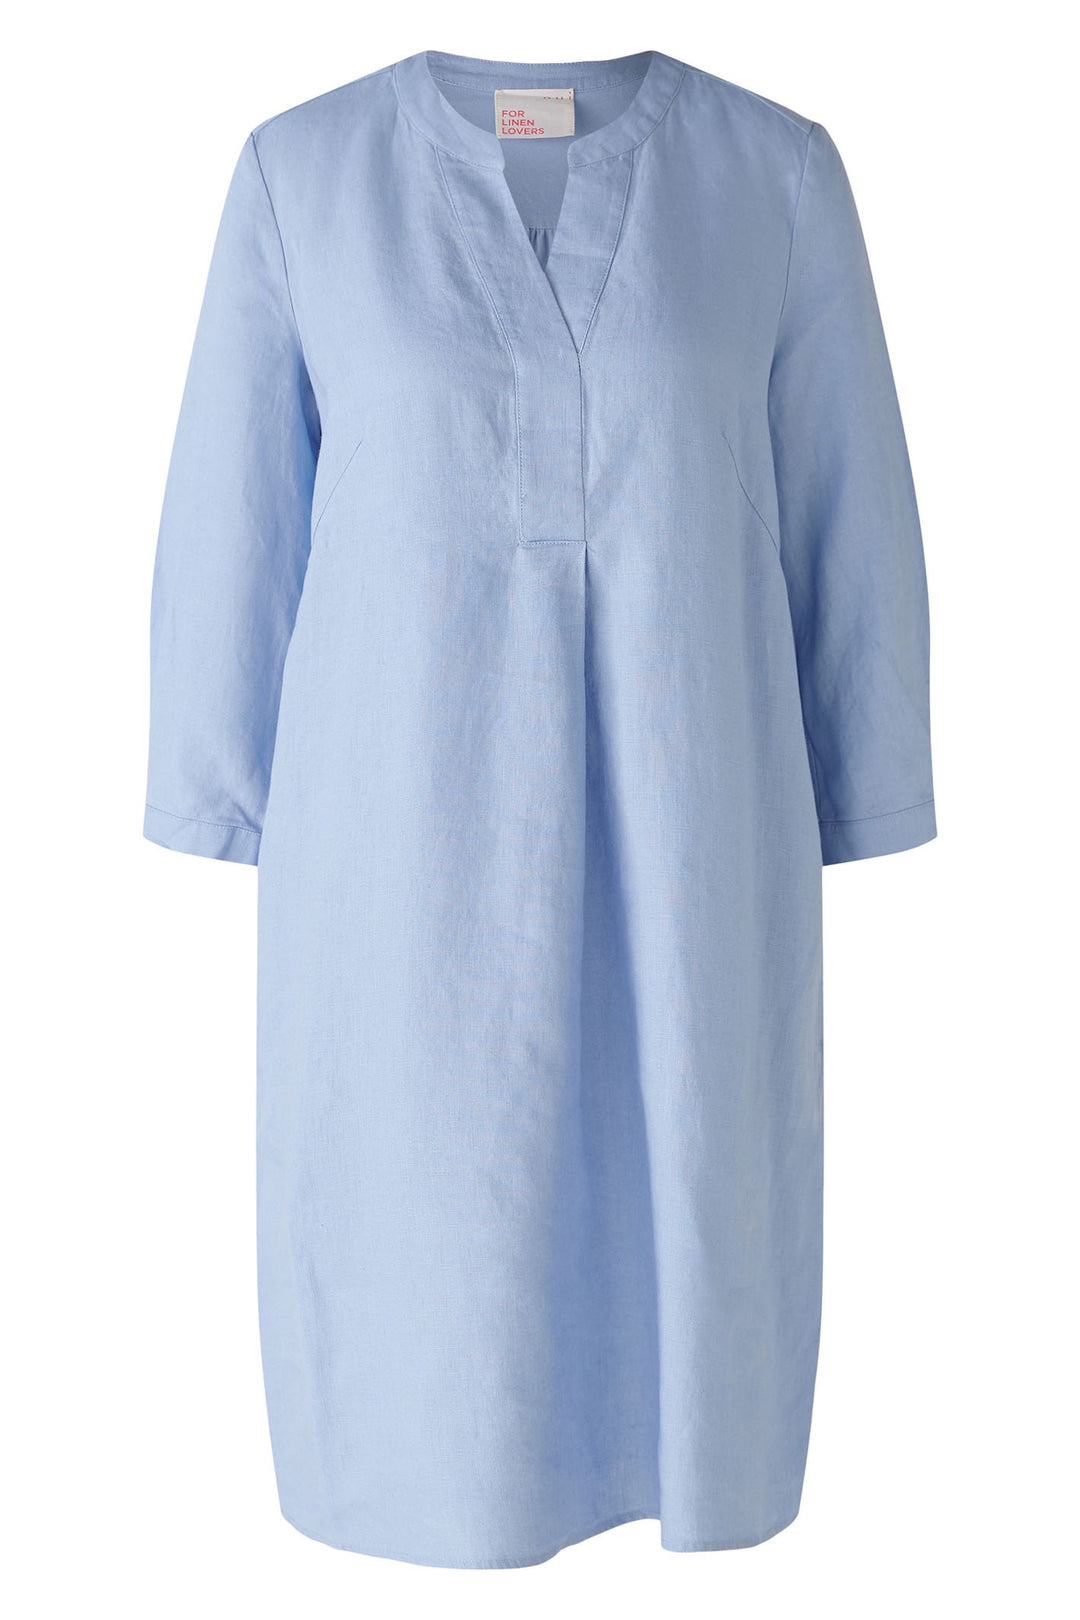 Oui 87560 Light Blue Split Neck A-Line Linen Dress With Sleeves - Dotique